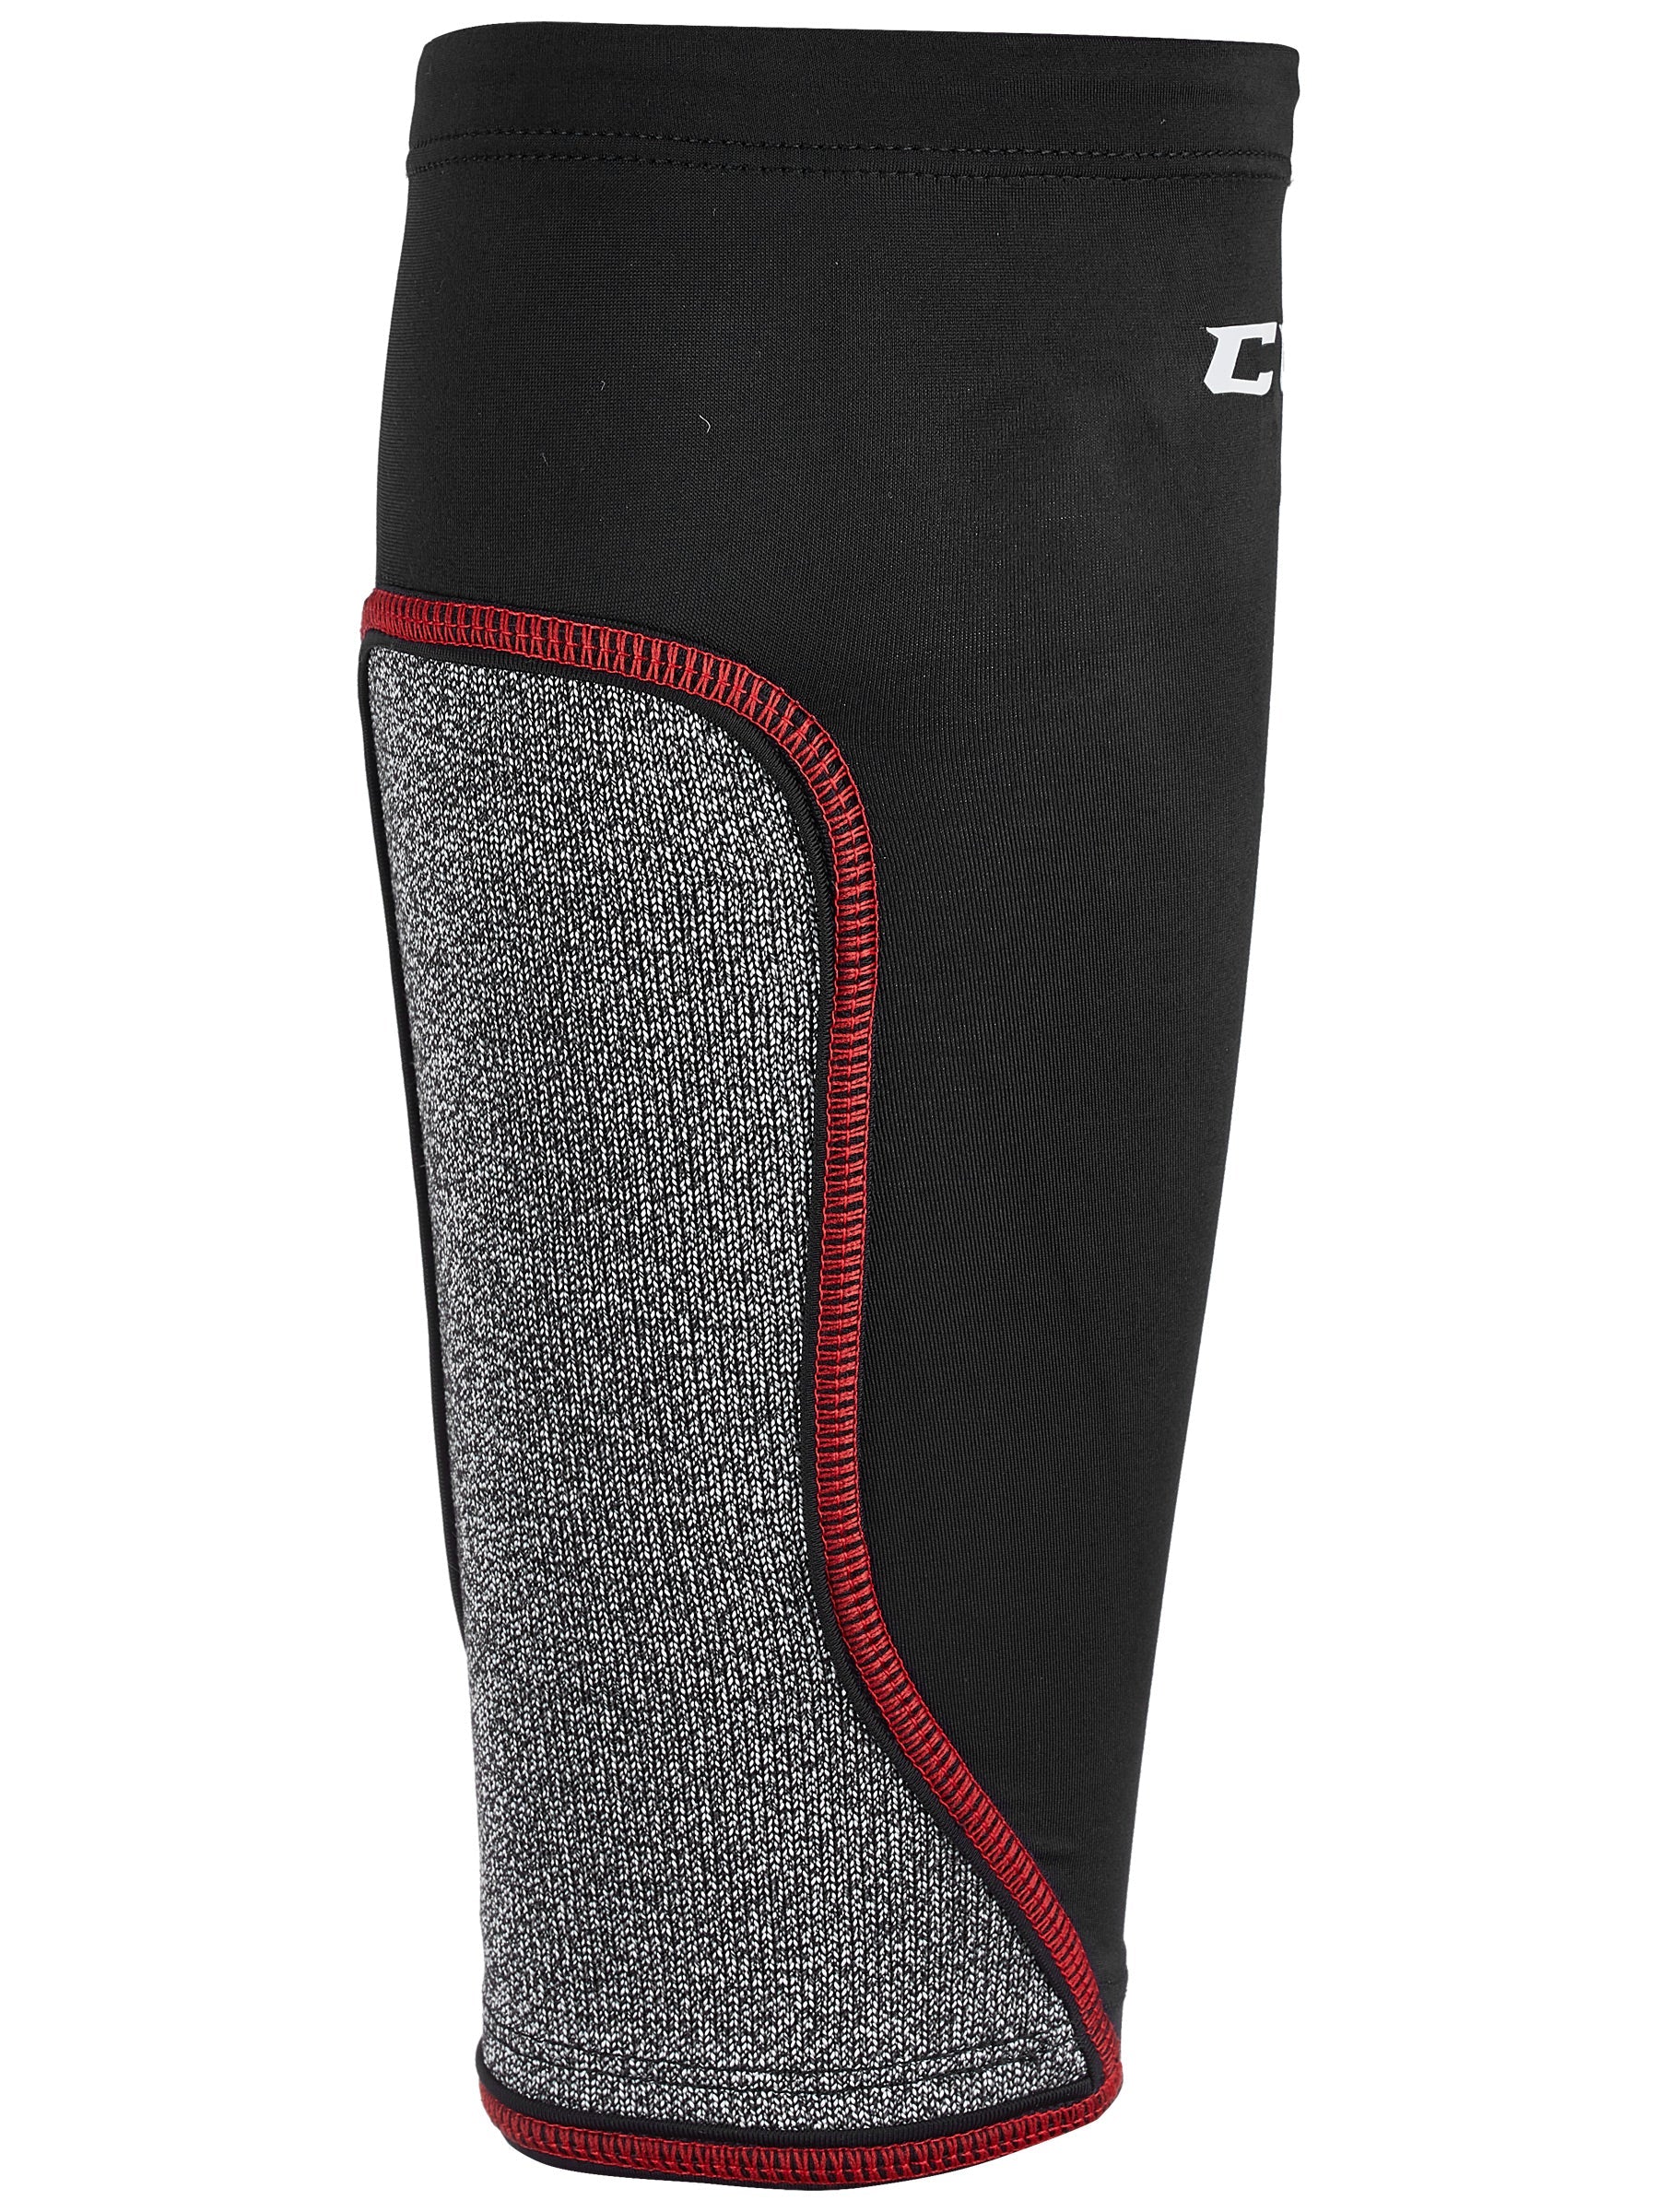 ccm-cut-proof-hockey-socks-sleeve